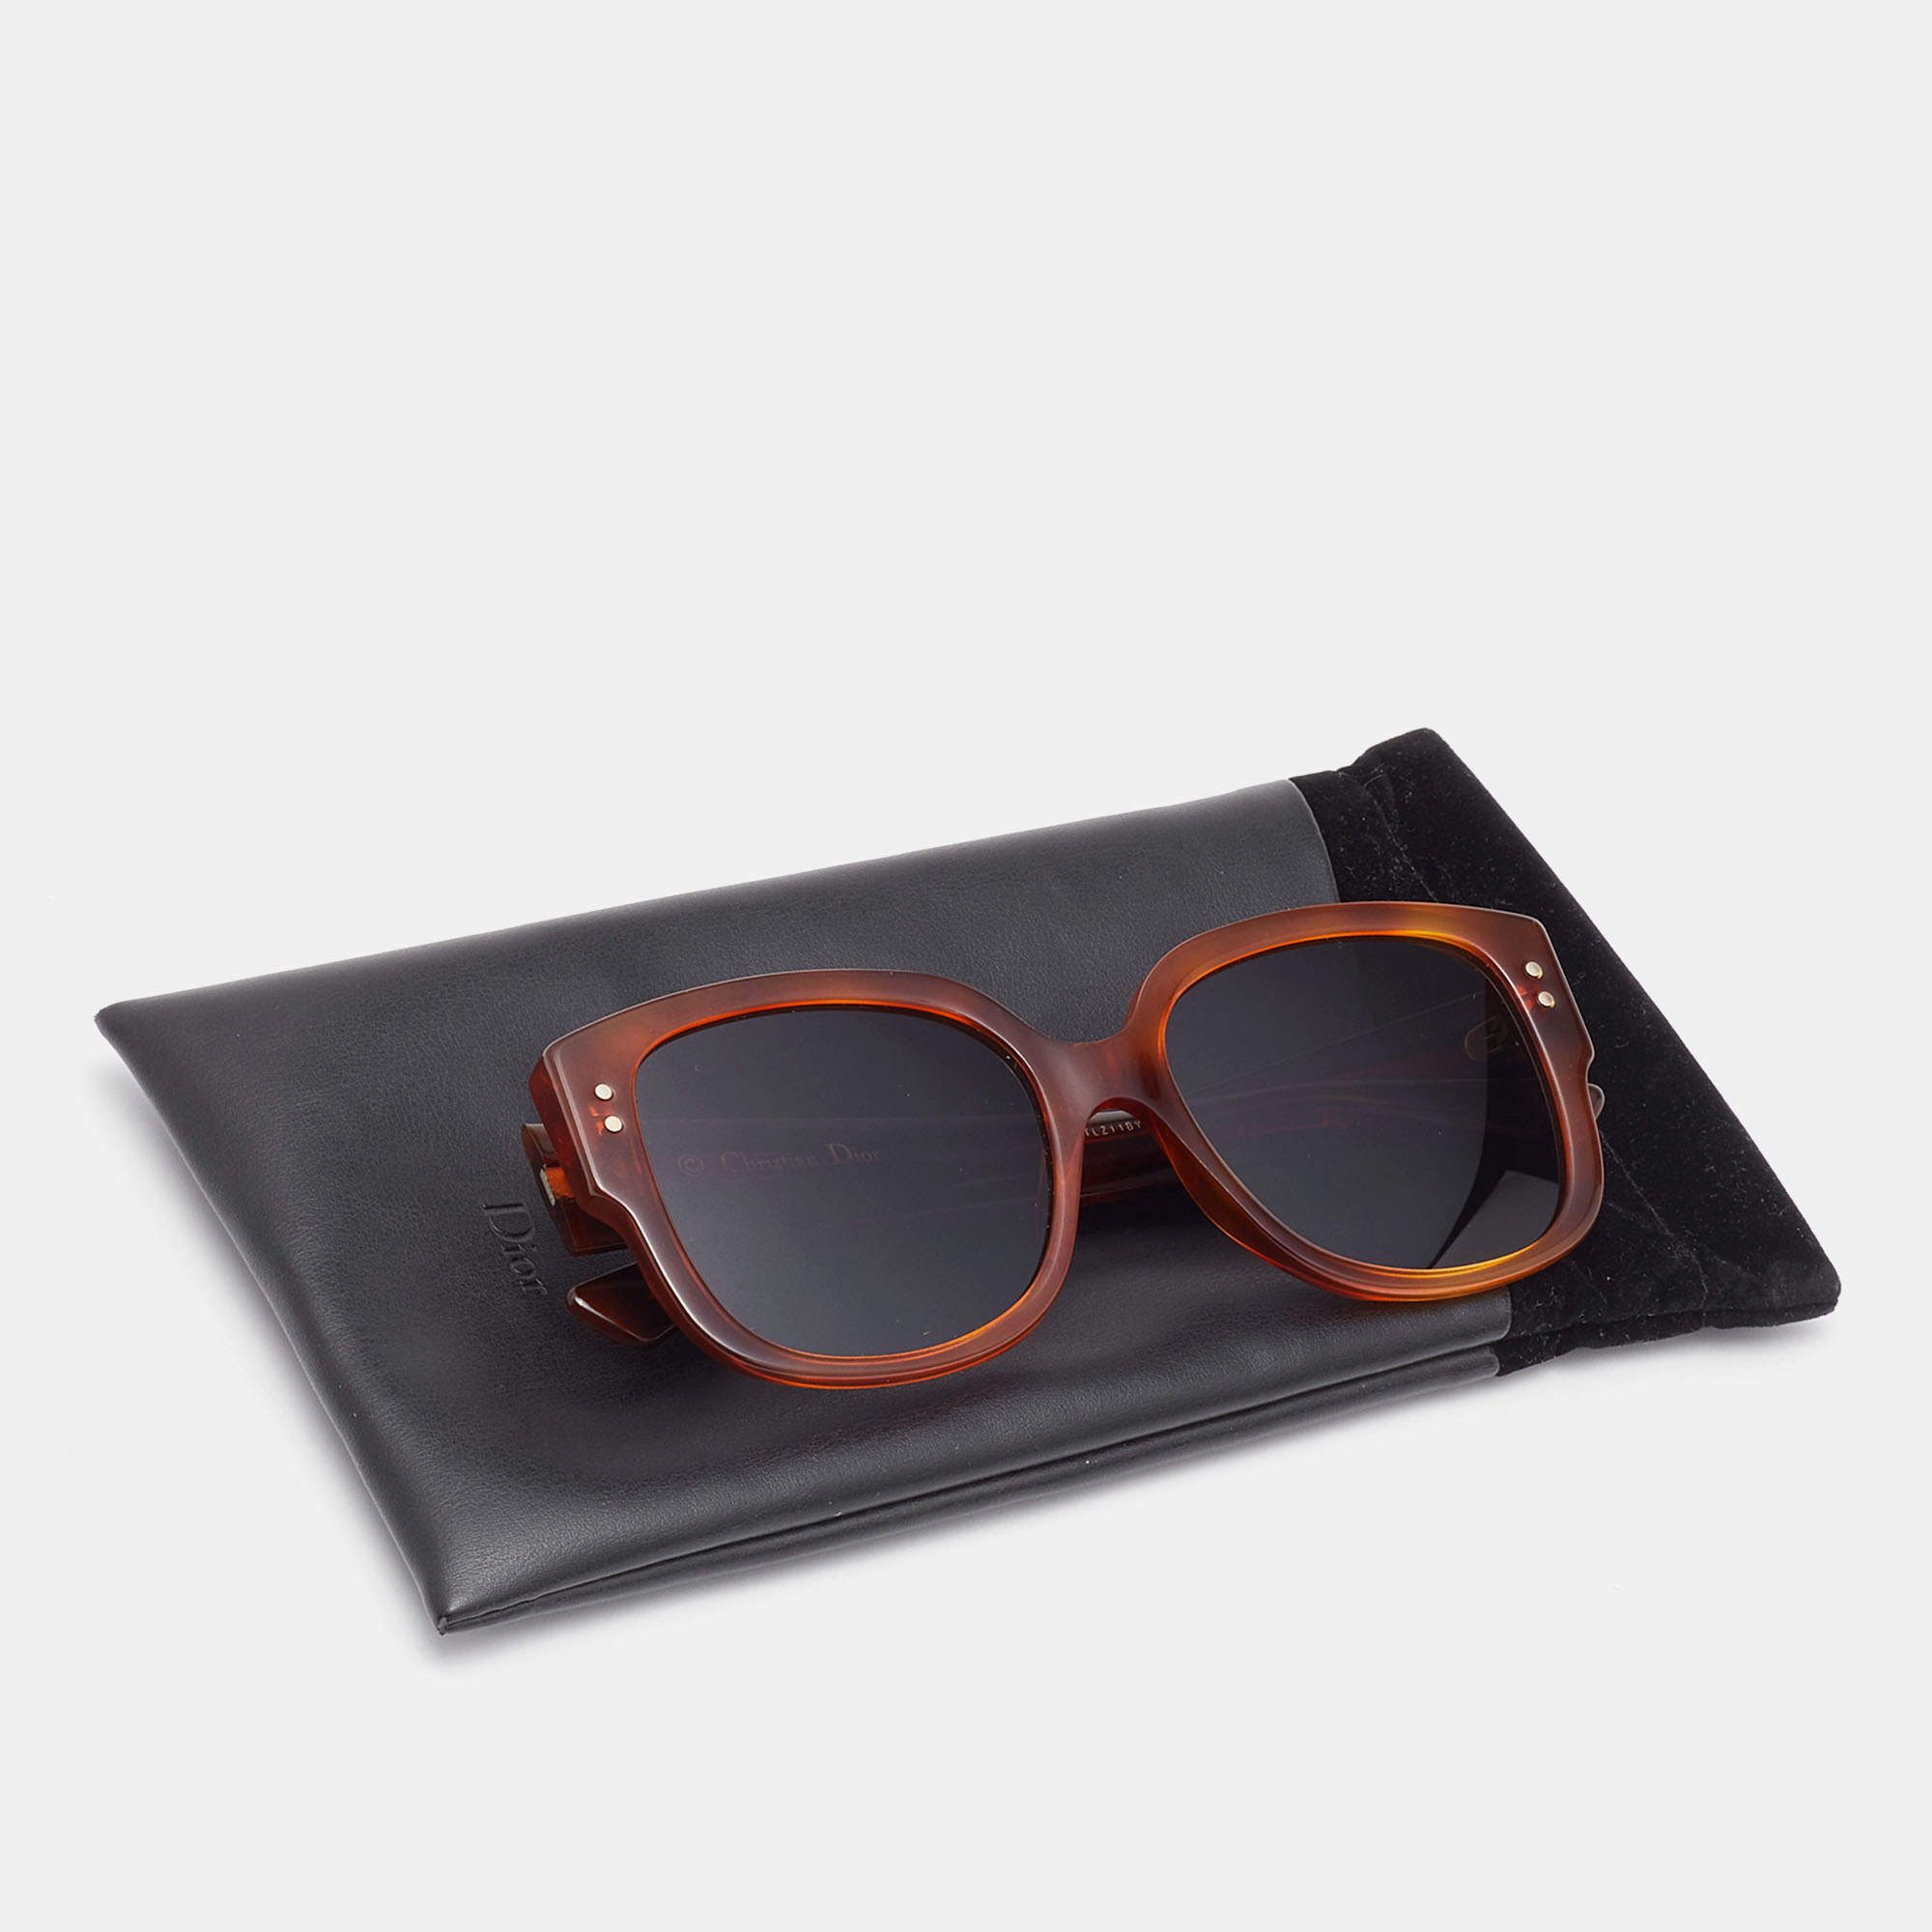 Dior Lady Dior Studs Sunglasses in Brown